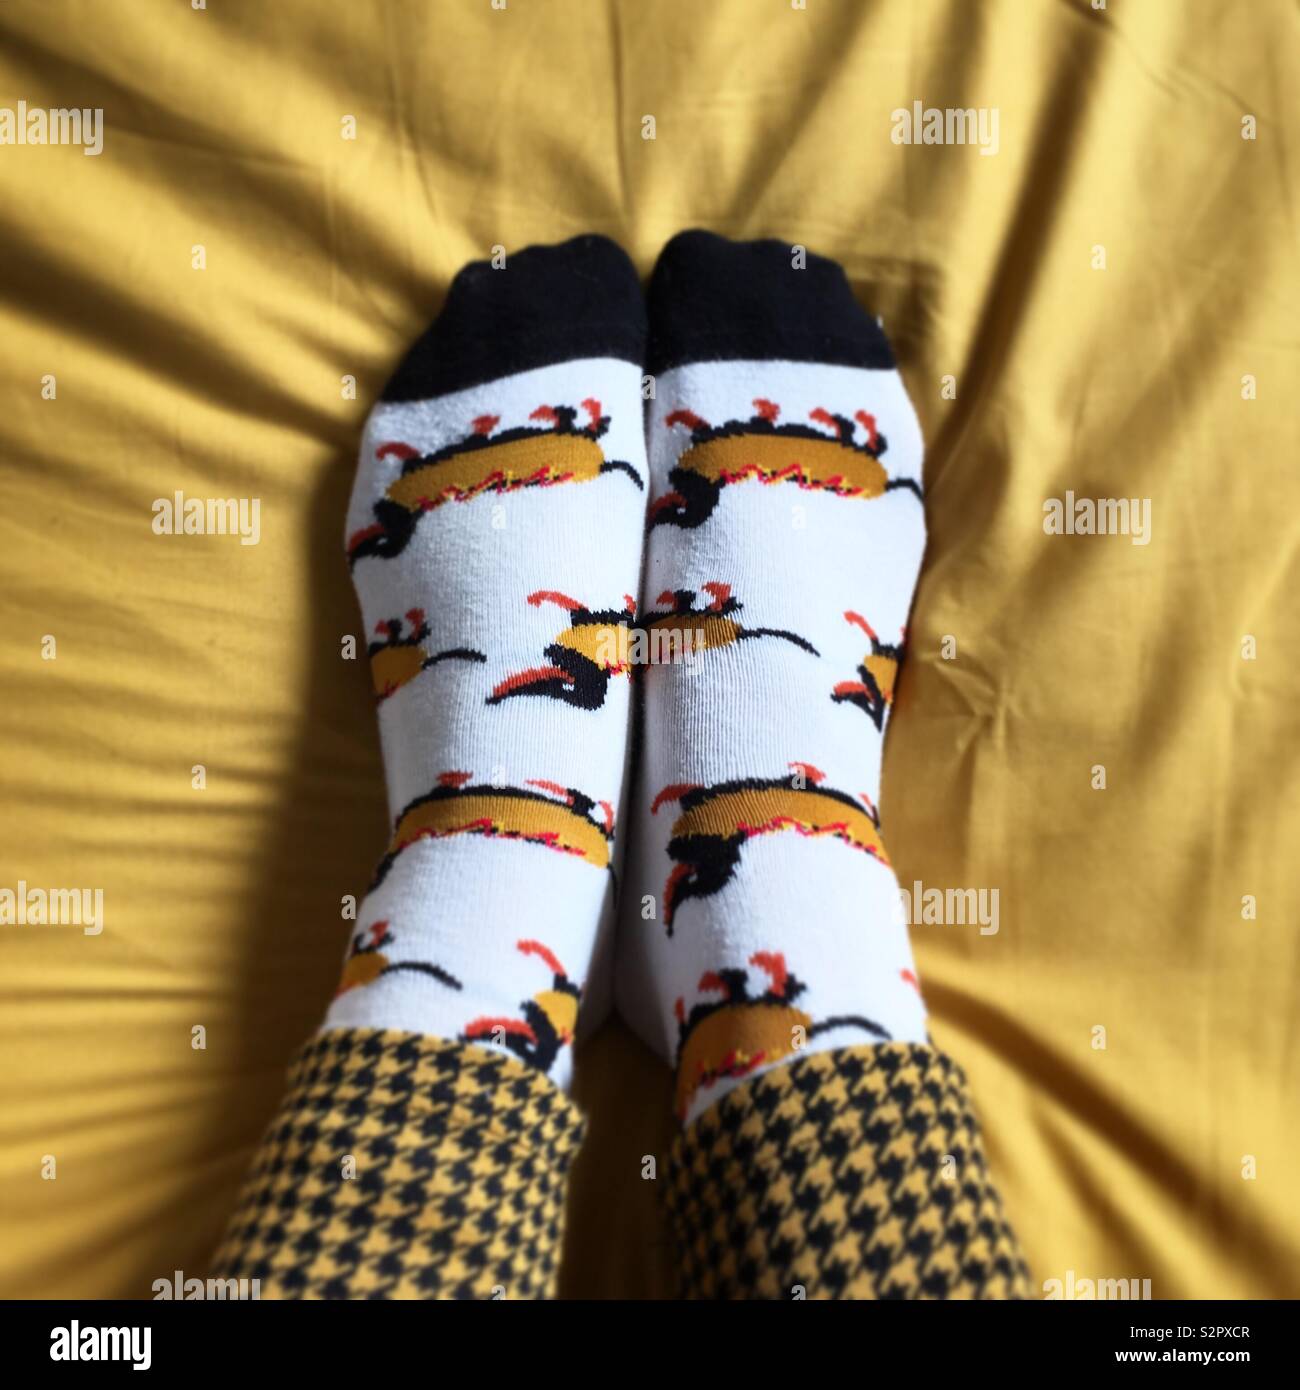 Feet in hot dog dachshund socks on mustard bedding Stock Photo